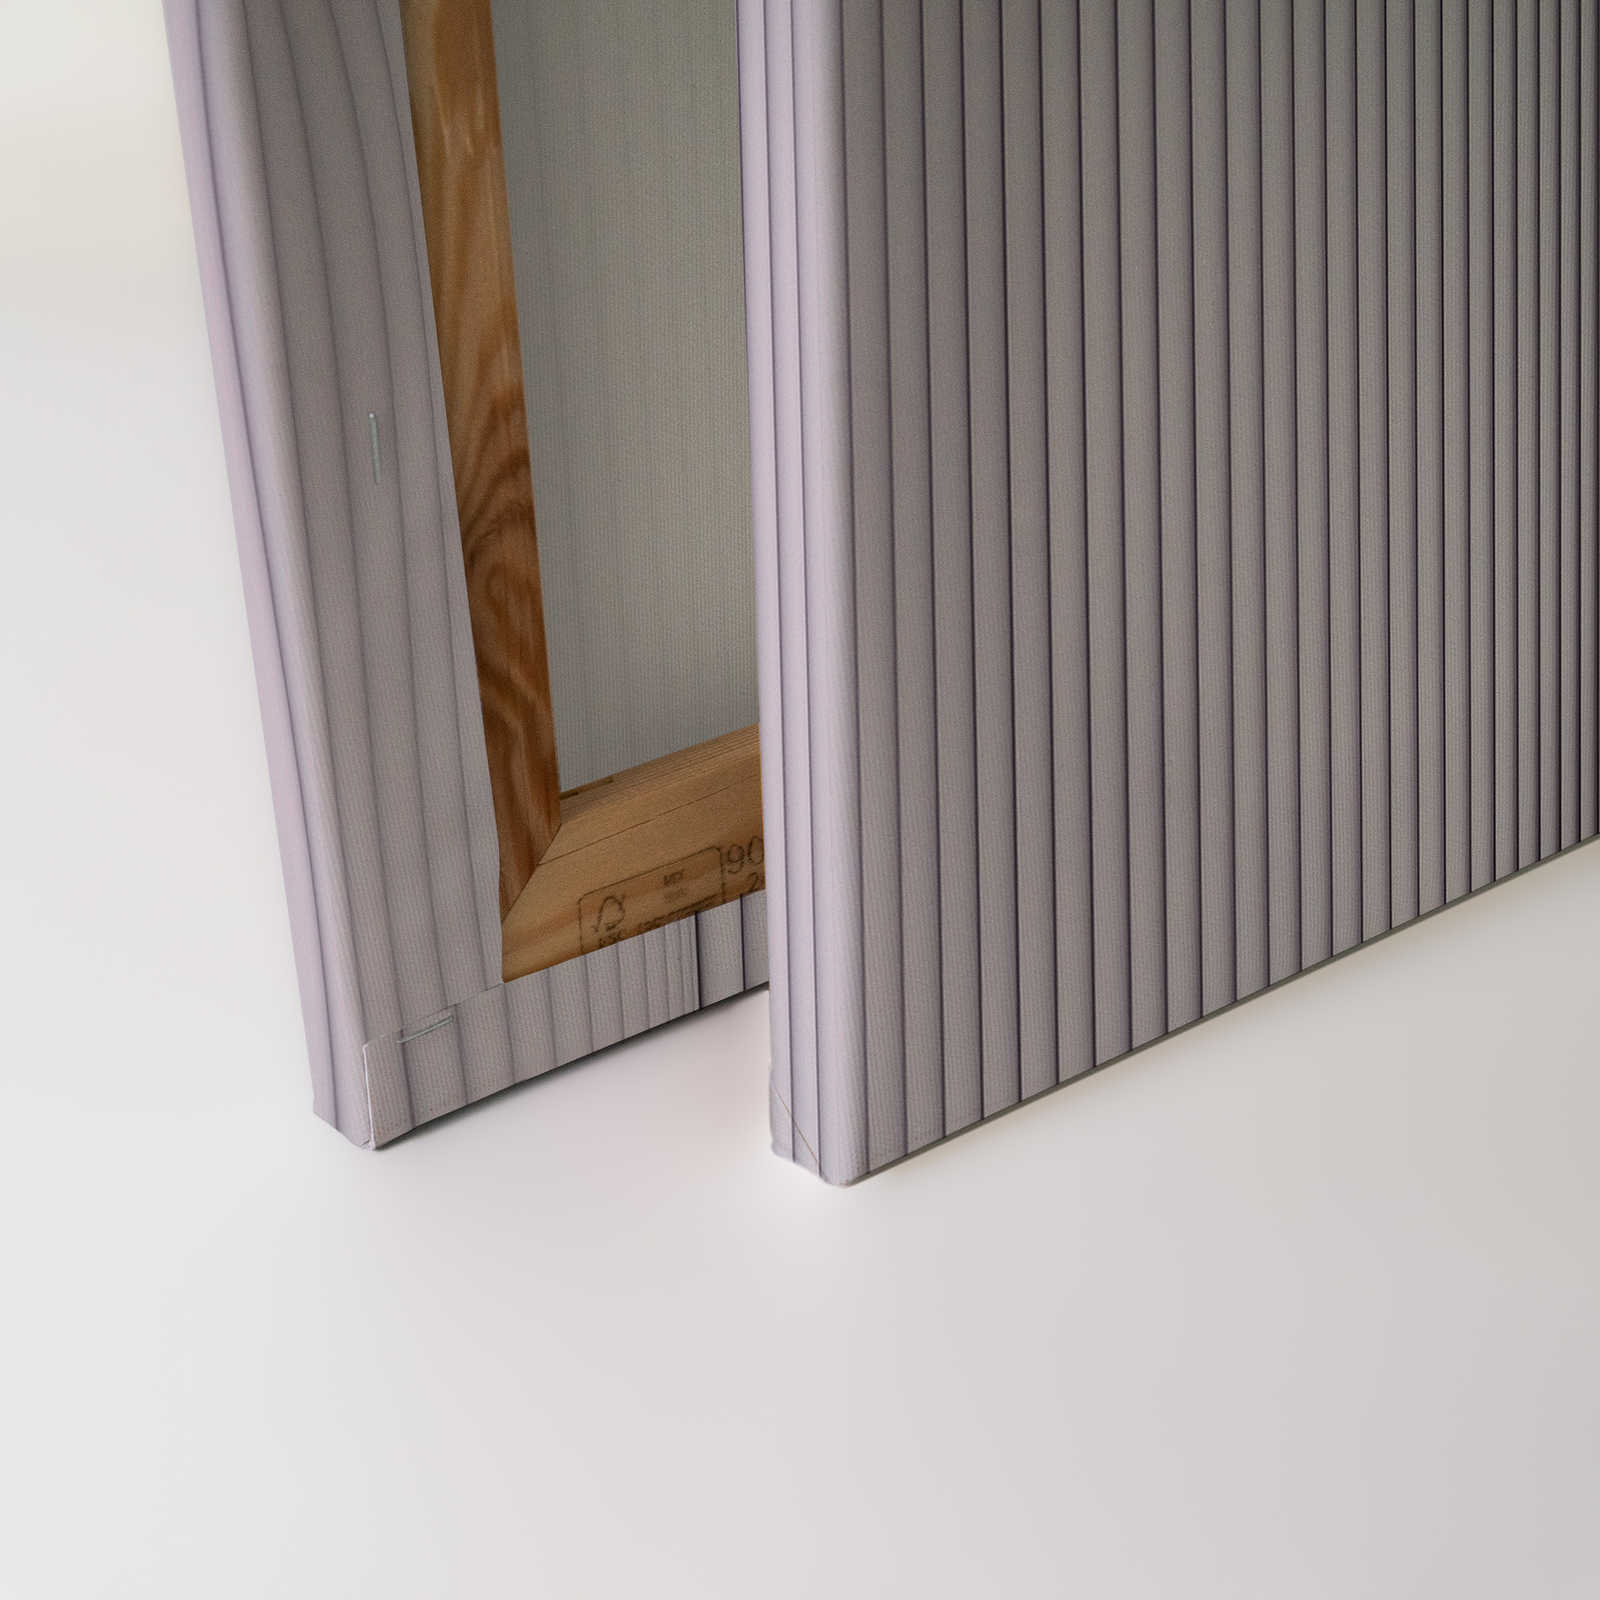             Magic Wall 1 - Streifen Leinwandbild 3D Illusion Effekt, Violett & Weiß – 1,20 m x 0,80 m
        